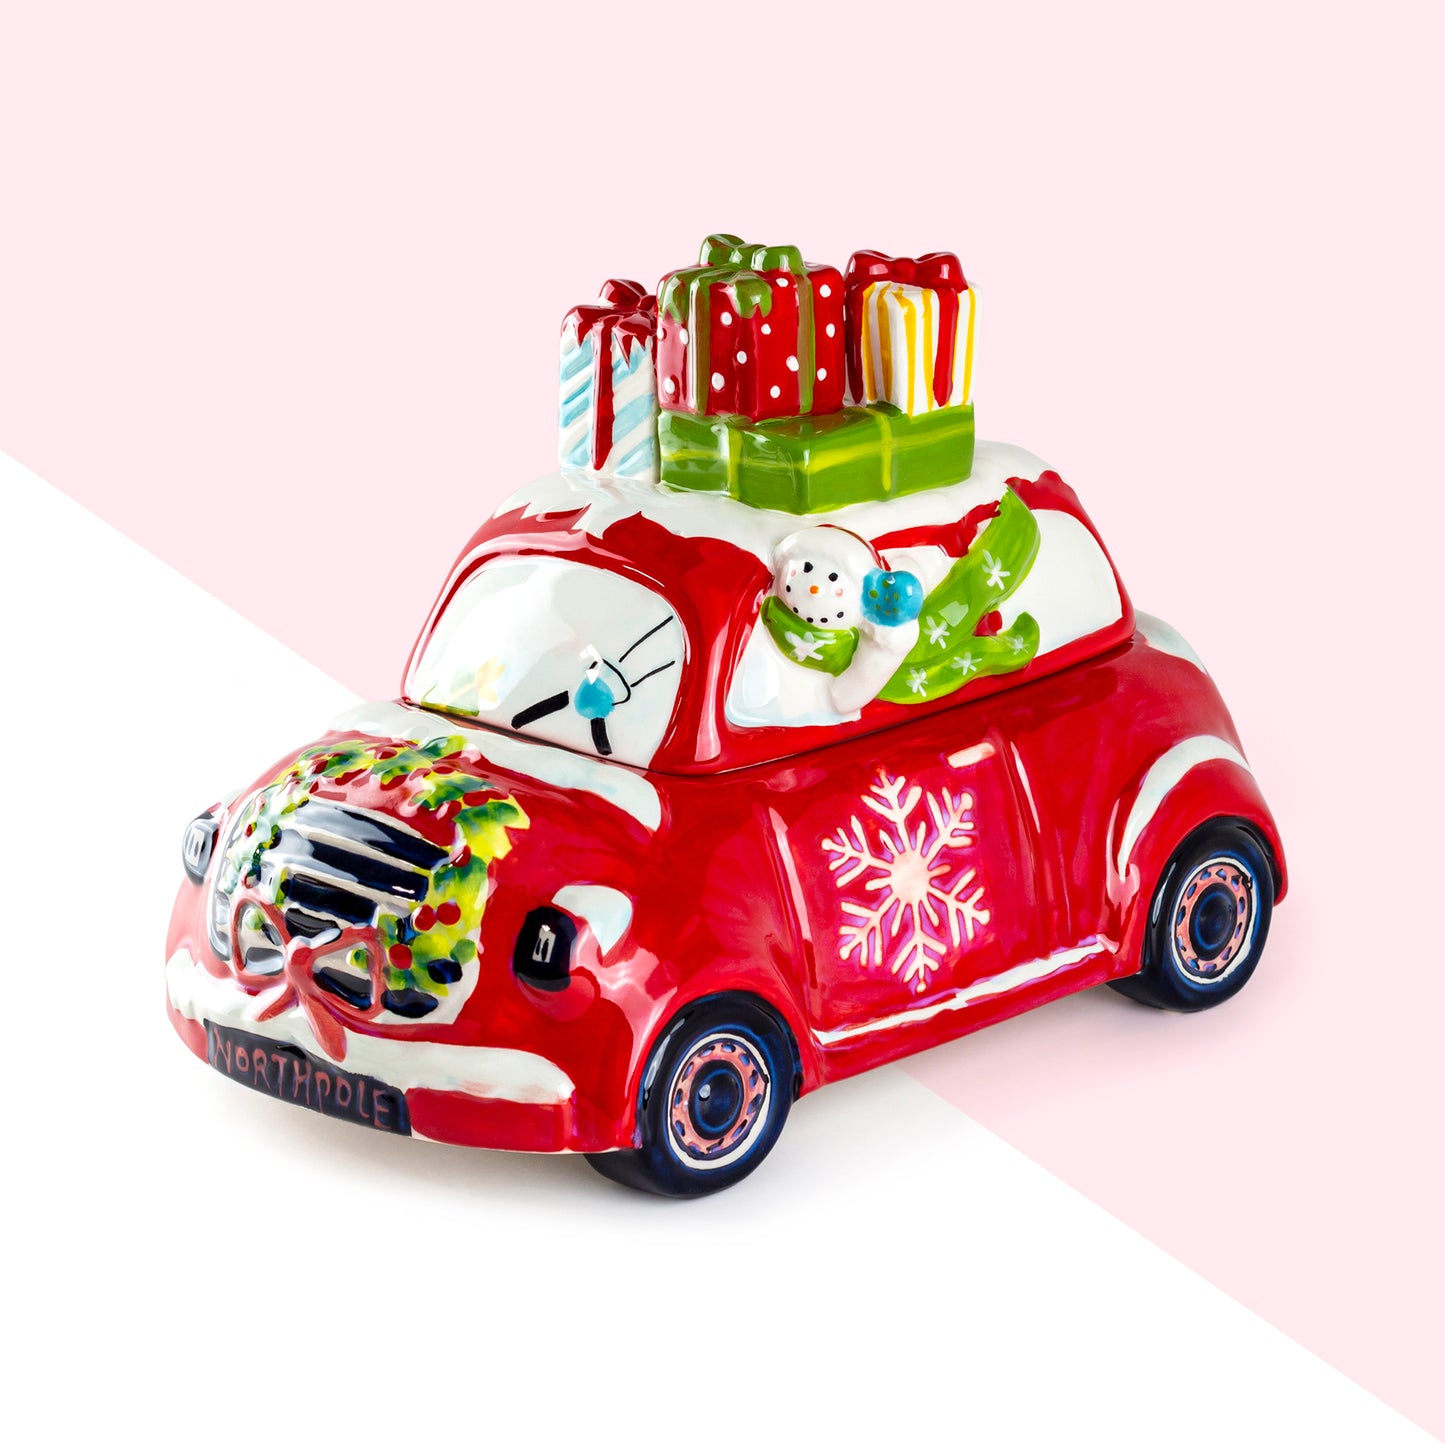 Potter's Studio Holiday Presents Car Cookie Jar